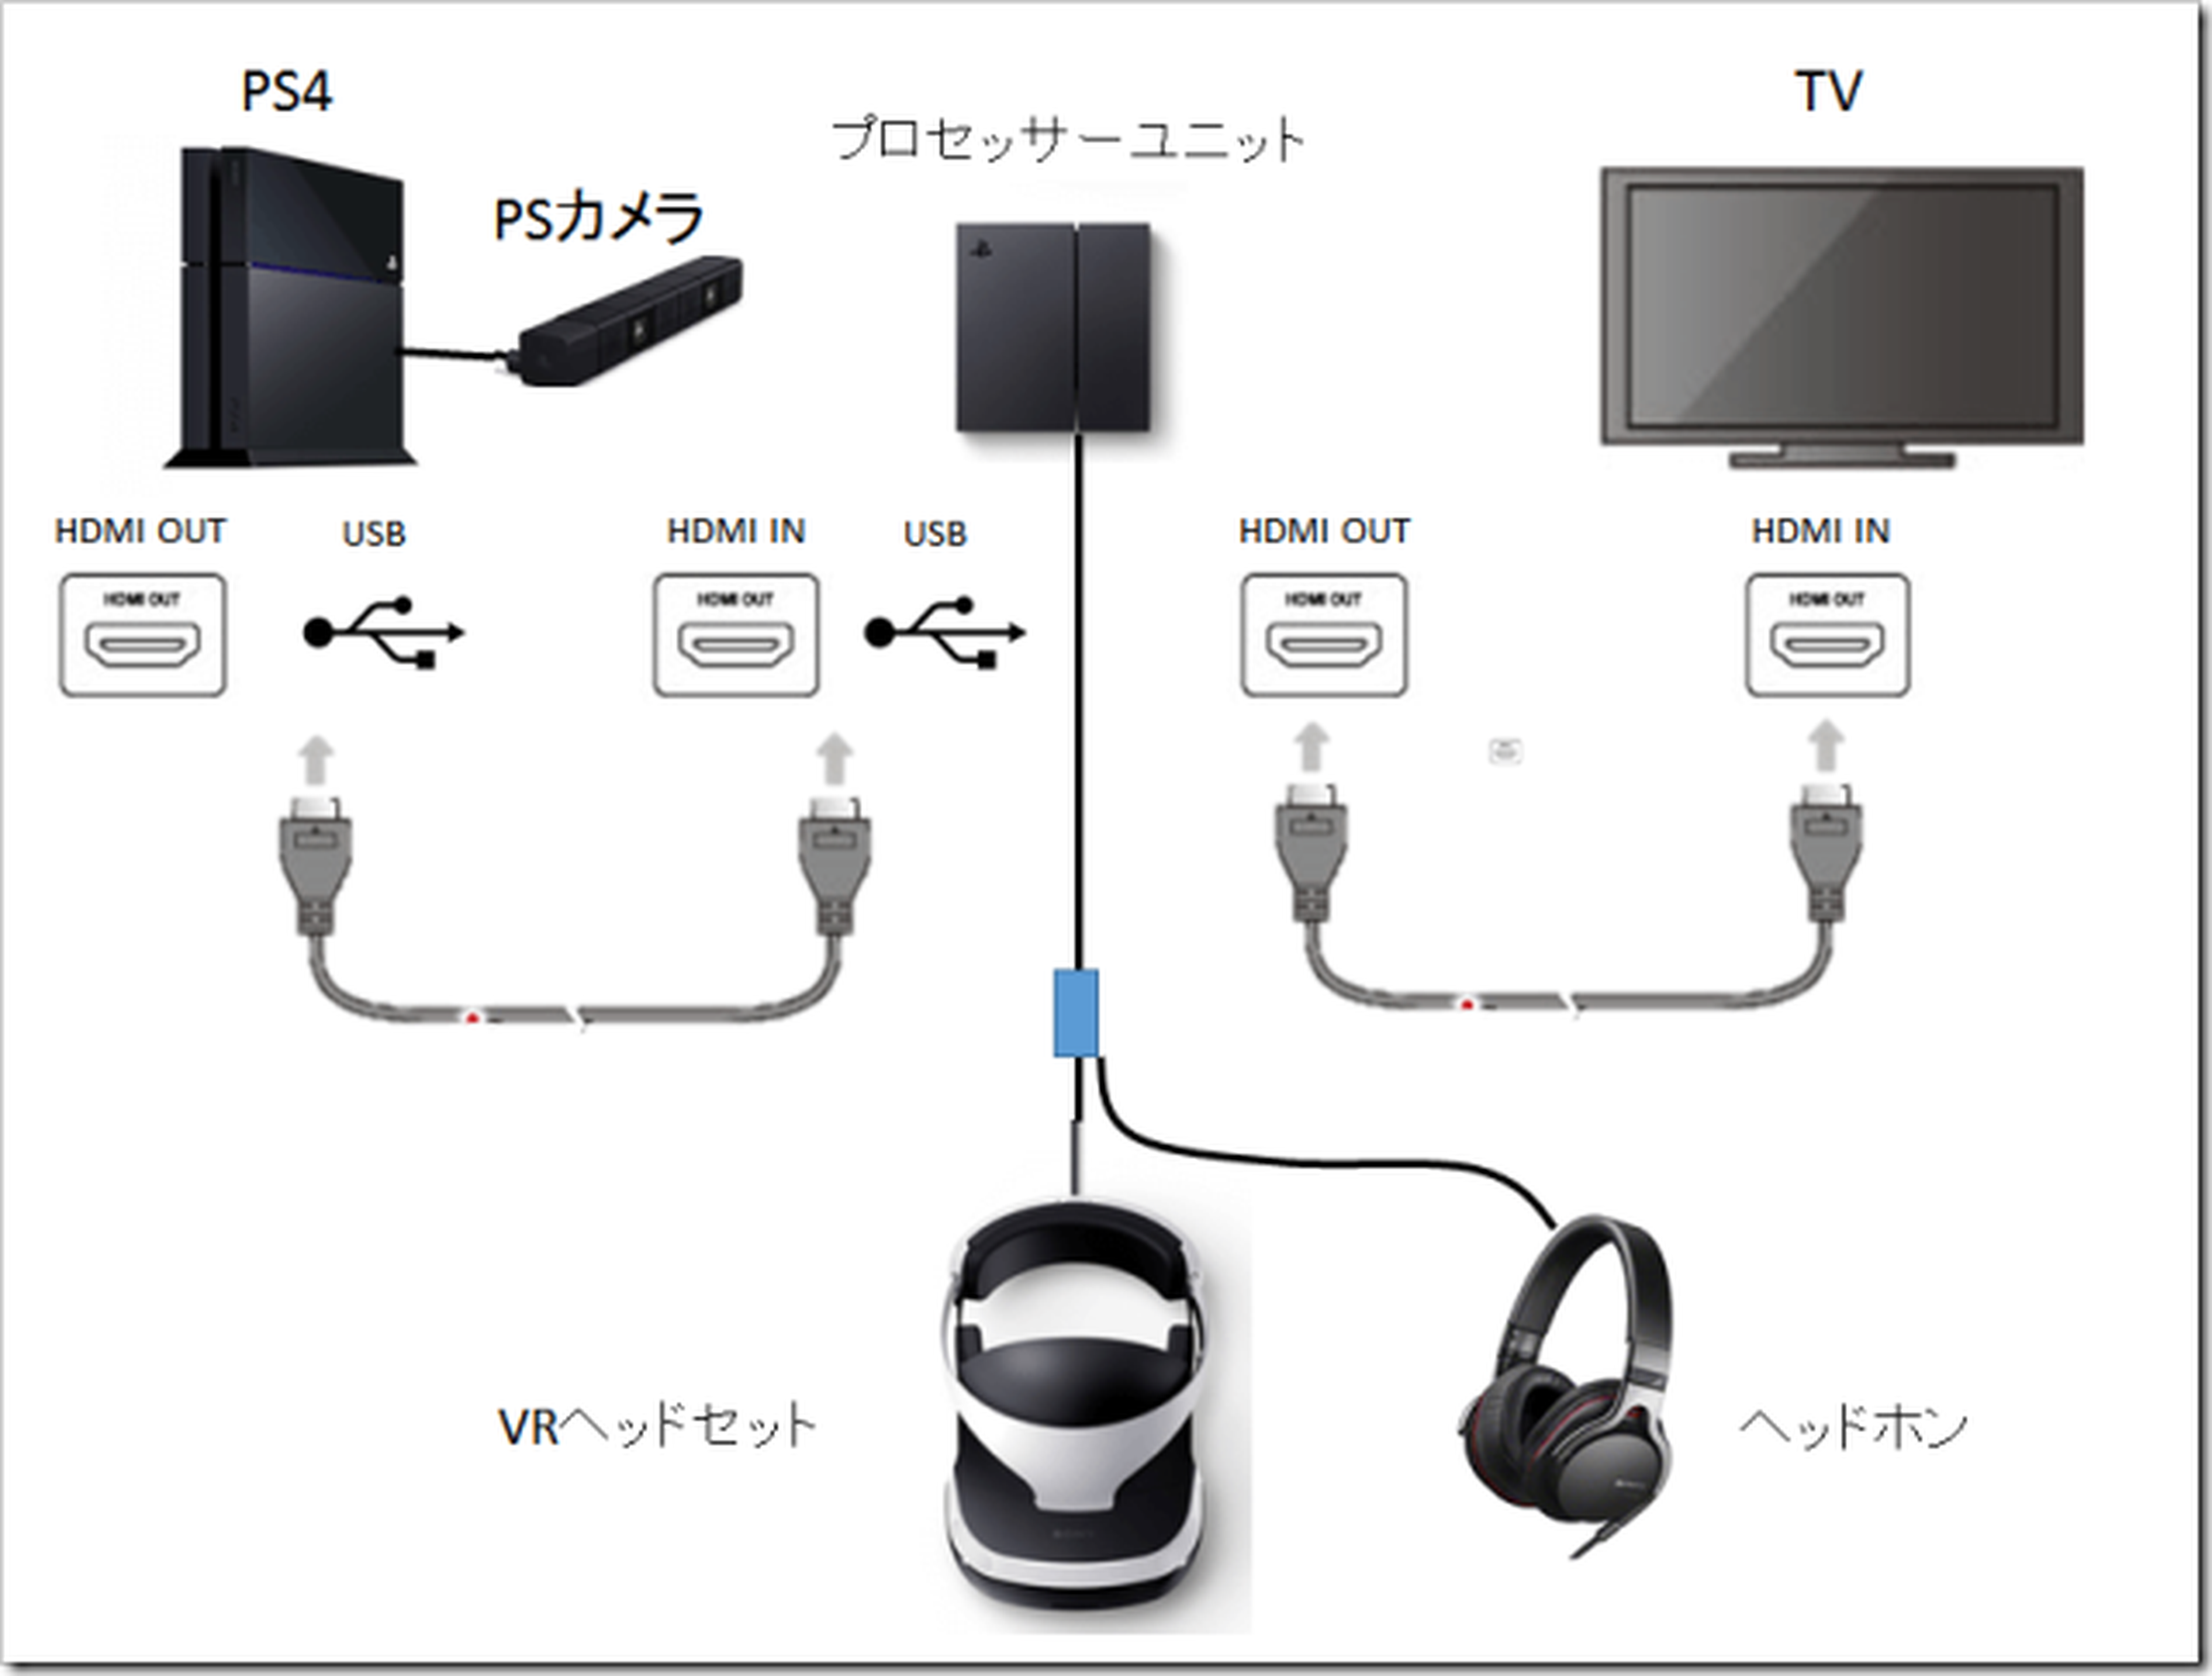 Gafas PLAYSTATION PS4 Megapack VR2 realidad cámara virtual Astro Skyrim